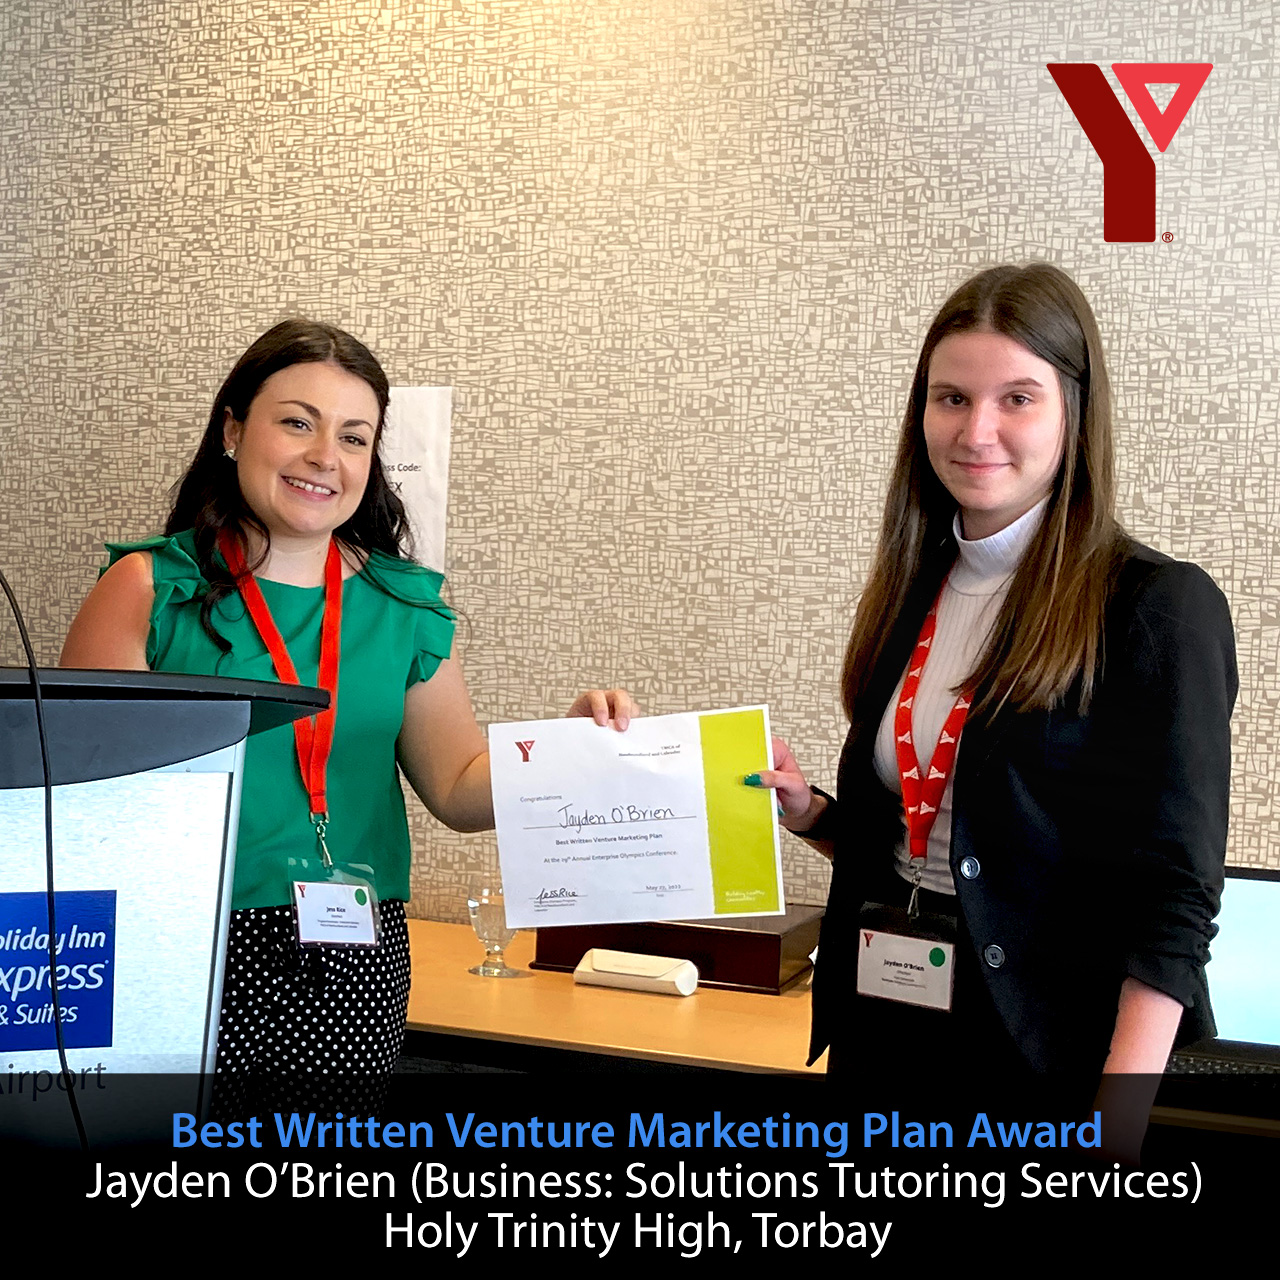 Best Written Venture Marketing Plan Award - Jayden O’Brien (Business: Solutions Tutoring Services), Holy Trinity High, Torbay